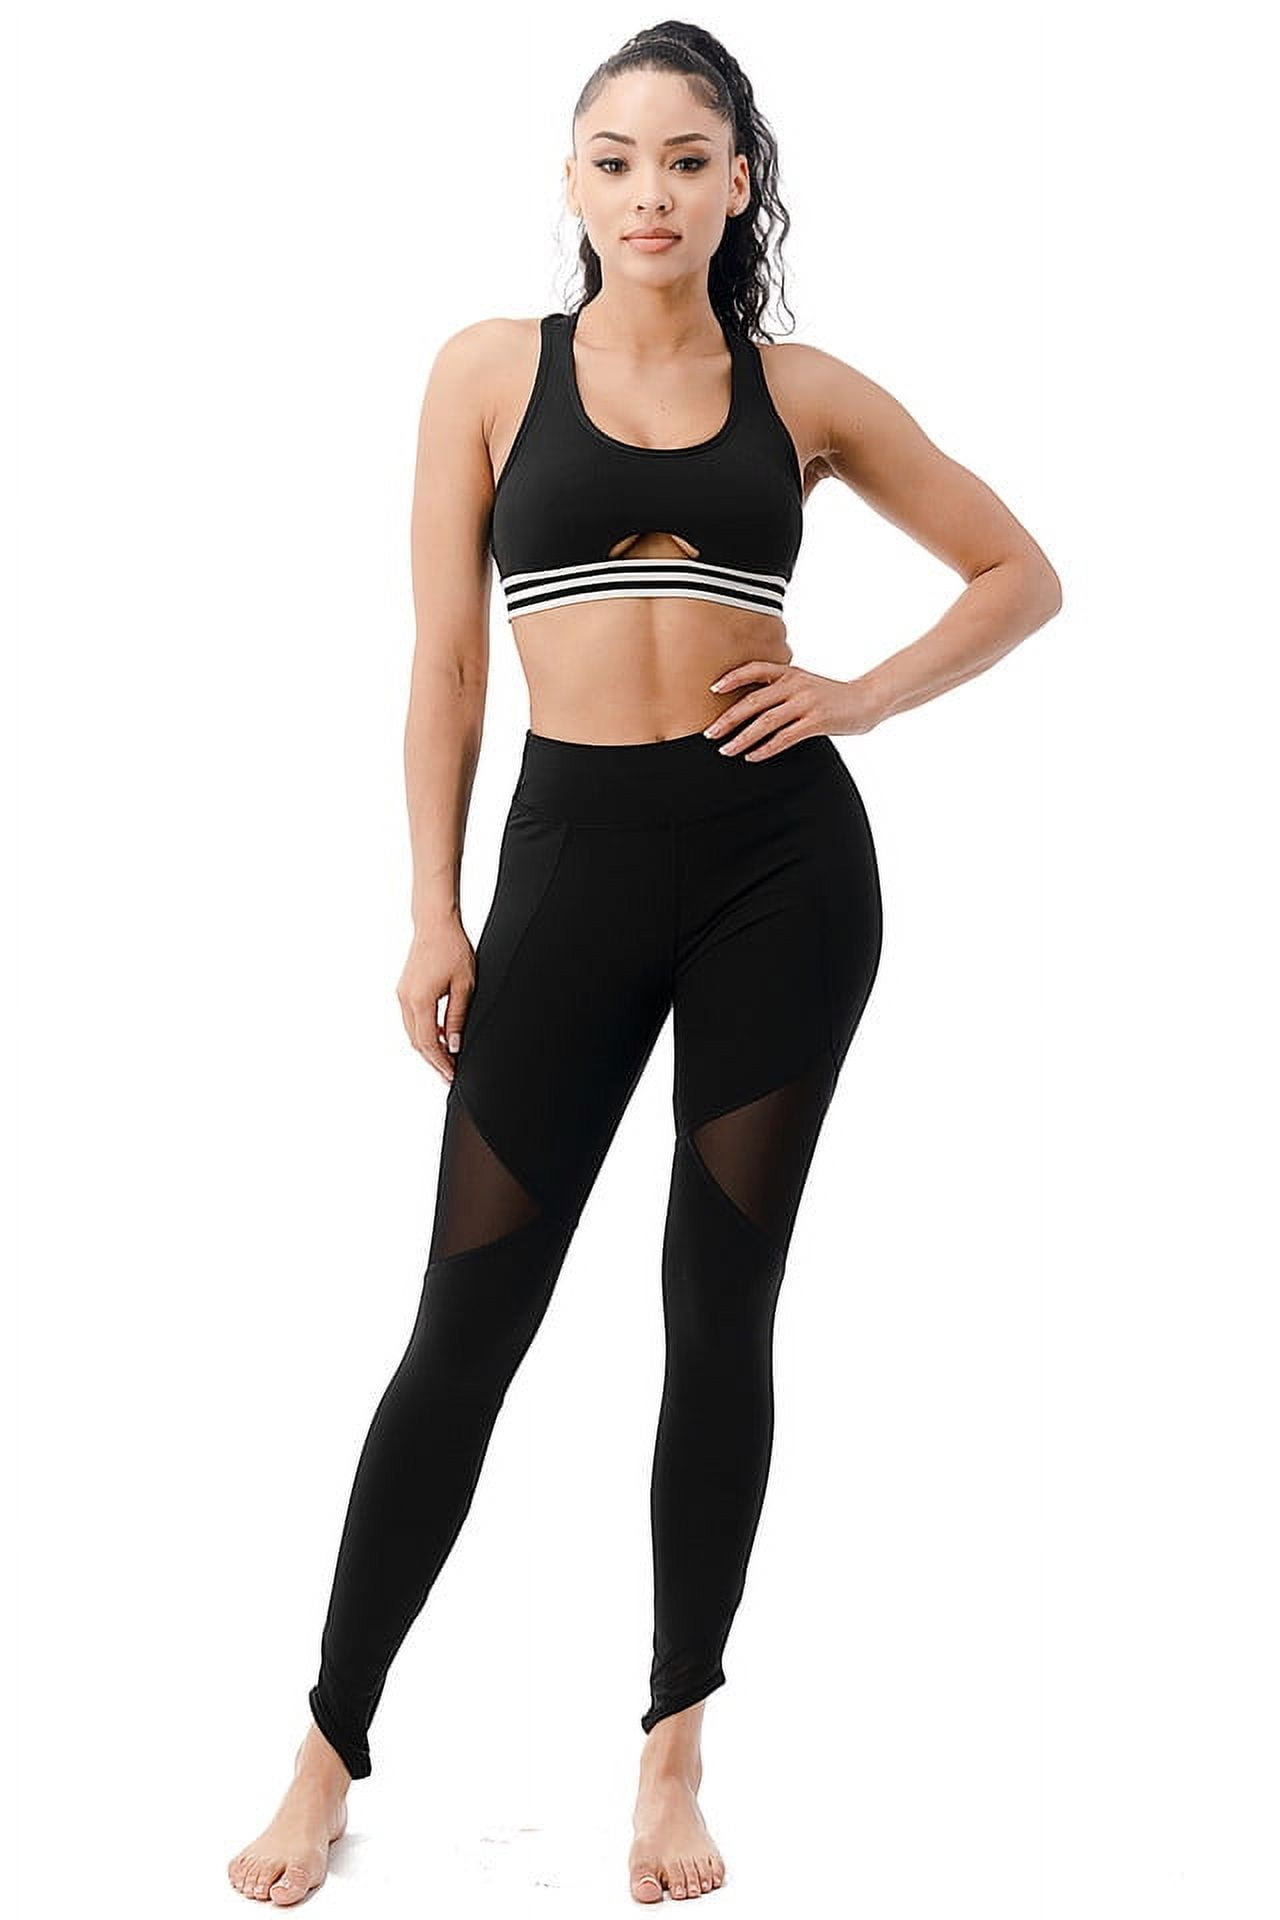 Women's Skinny Leggings Mesh Panel 4-way Stretch Sports Workout Breathable Yoga  Pants Black Female Size Medium S2bl9 